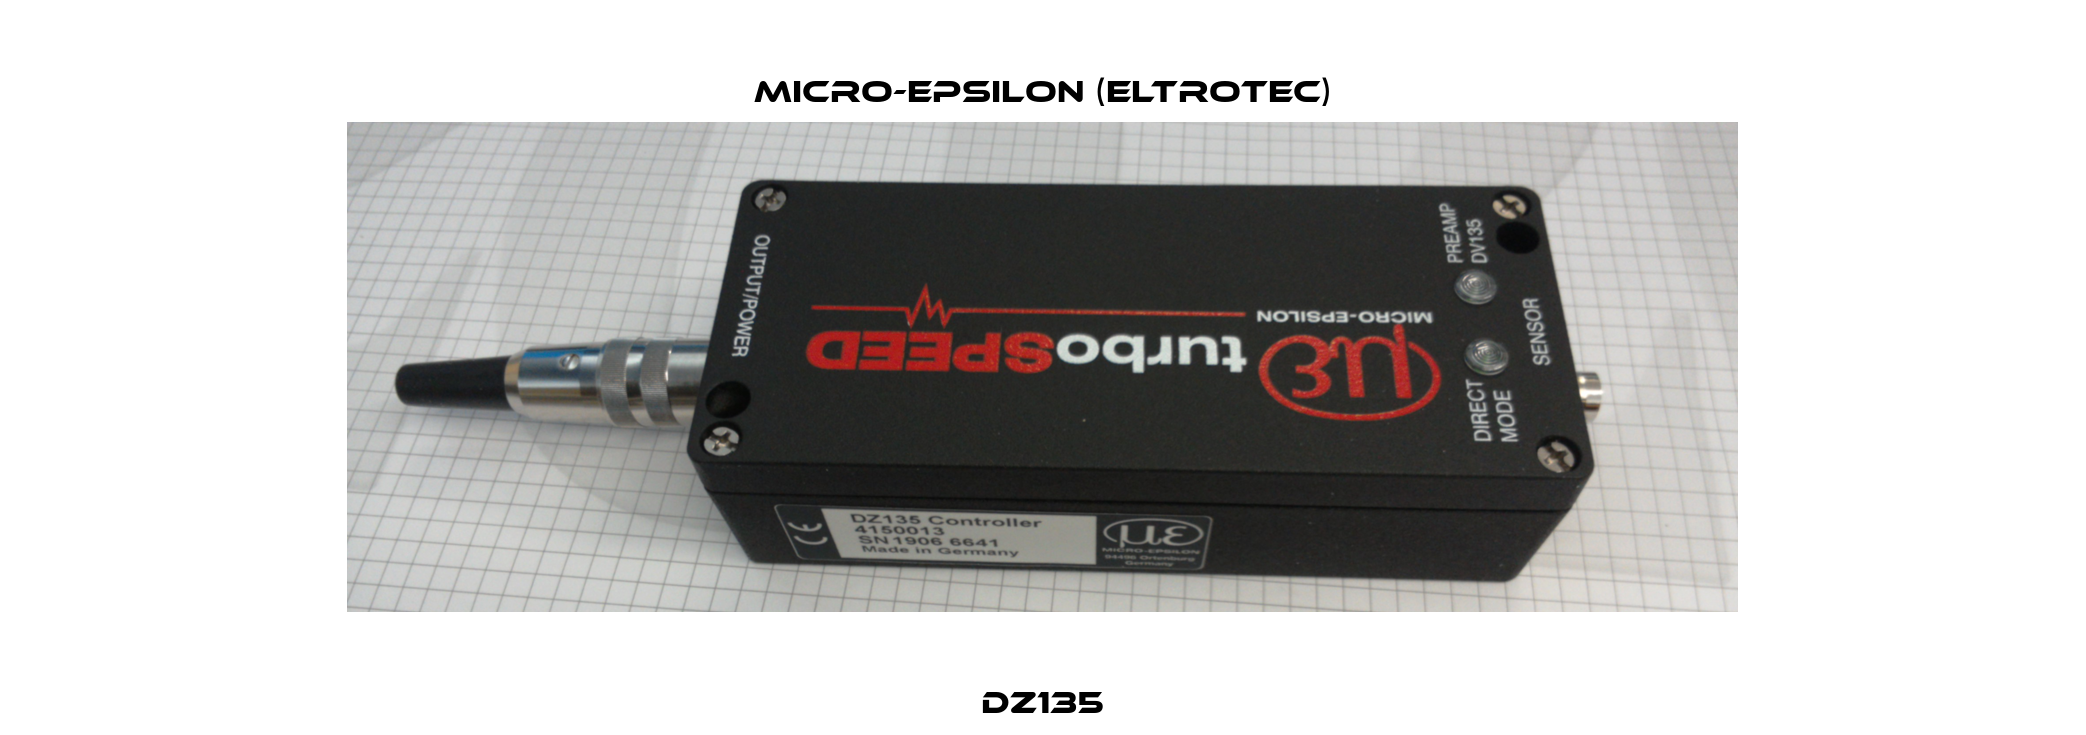 DZ135 Micro-Epsilon (Eltrotec)